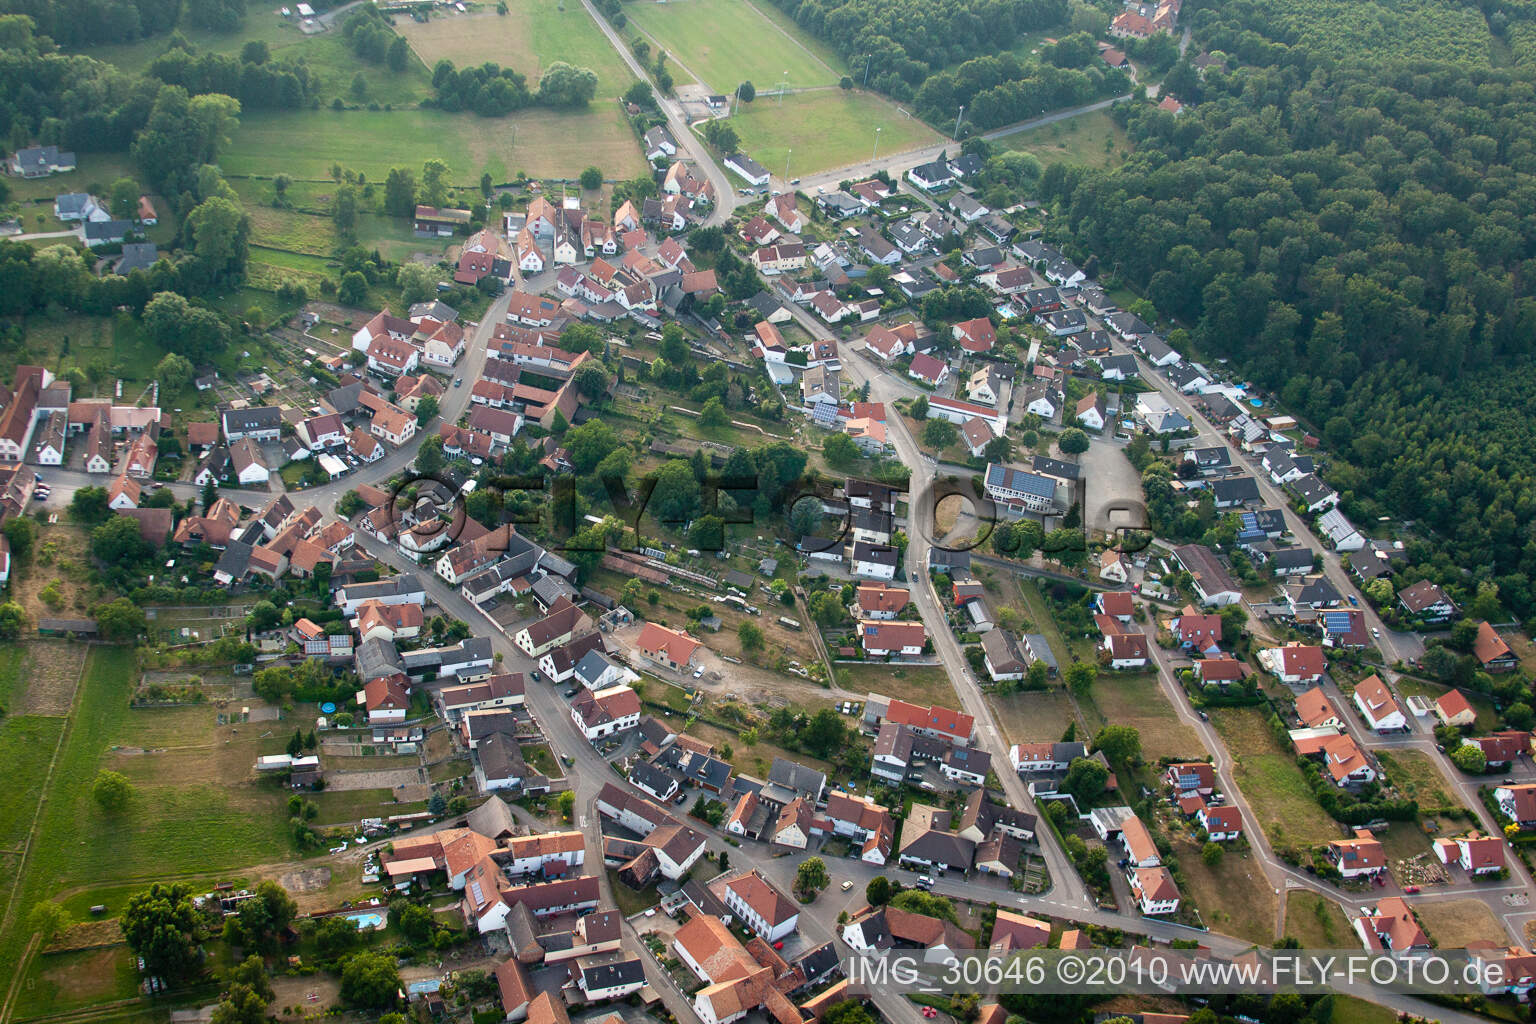 Scheibenhardt in Scheibenhard in the state Bas-Rhin, France out of the air